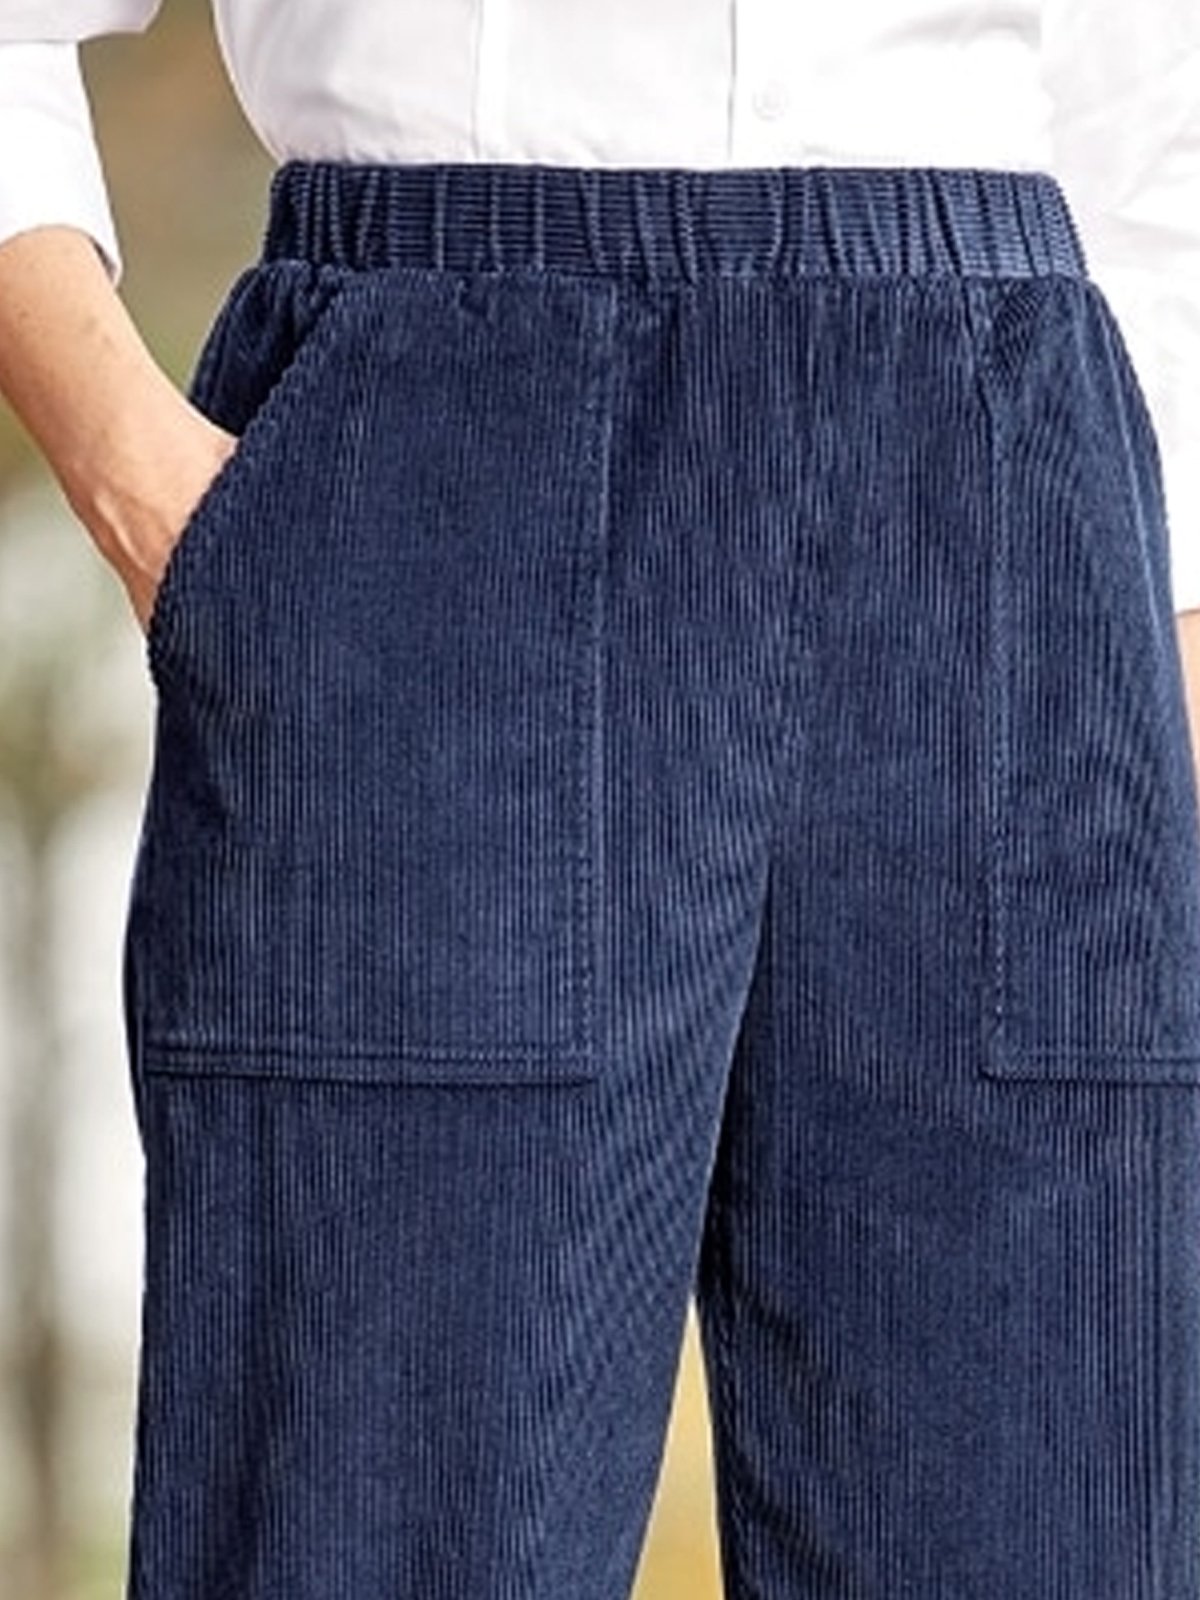 Women Autumn Winter Casual Plain Pockets Elastic Waist Corduroy Pants